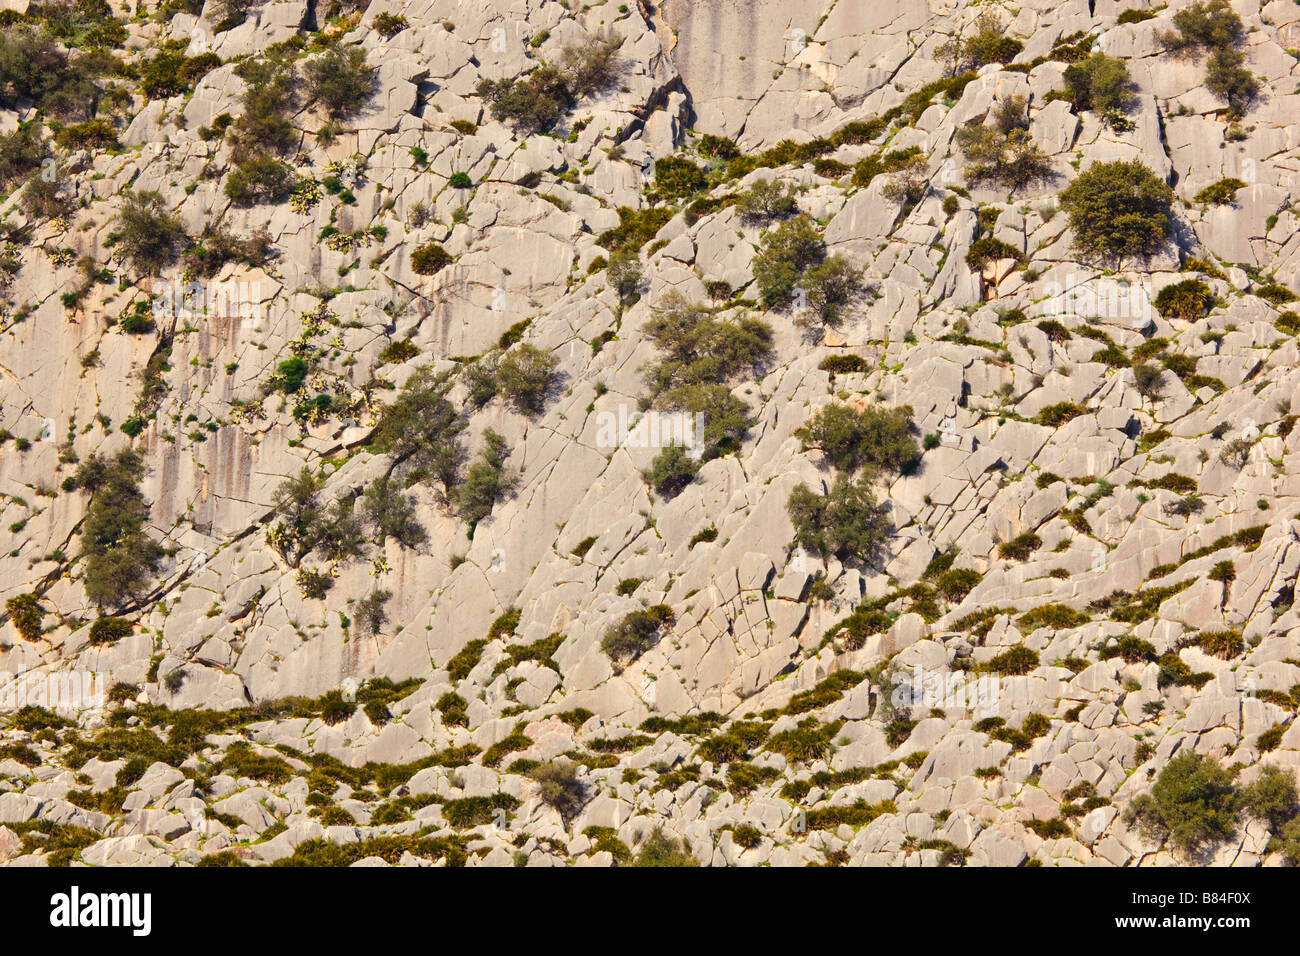 Rock faces near El Chorro Malaga Province Spain Stock Photo